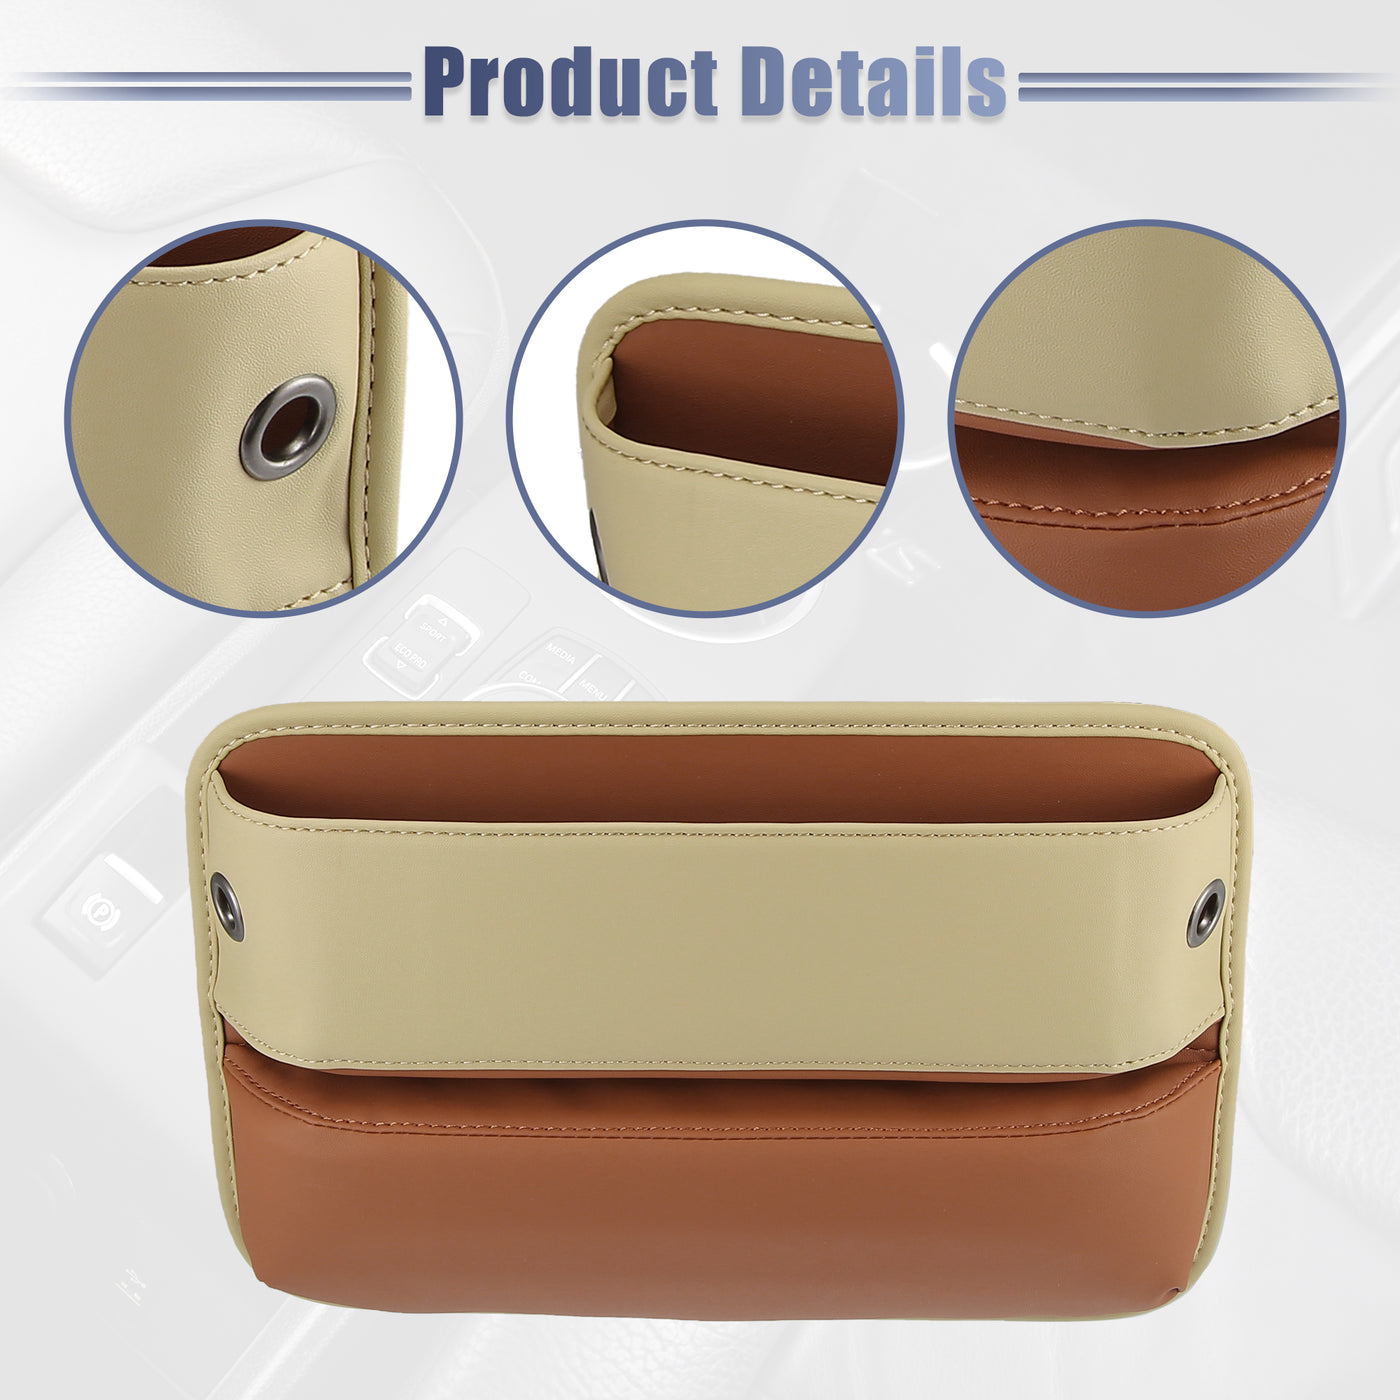 ACROPIX Brown Beige PU Leather Car Seat Gap Filler Multi-function Car Seat Organizer Console Side Pocket Storage Box - Pack of 1